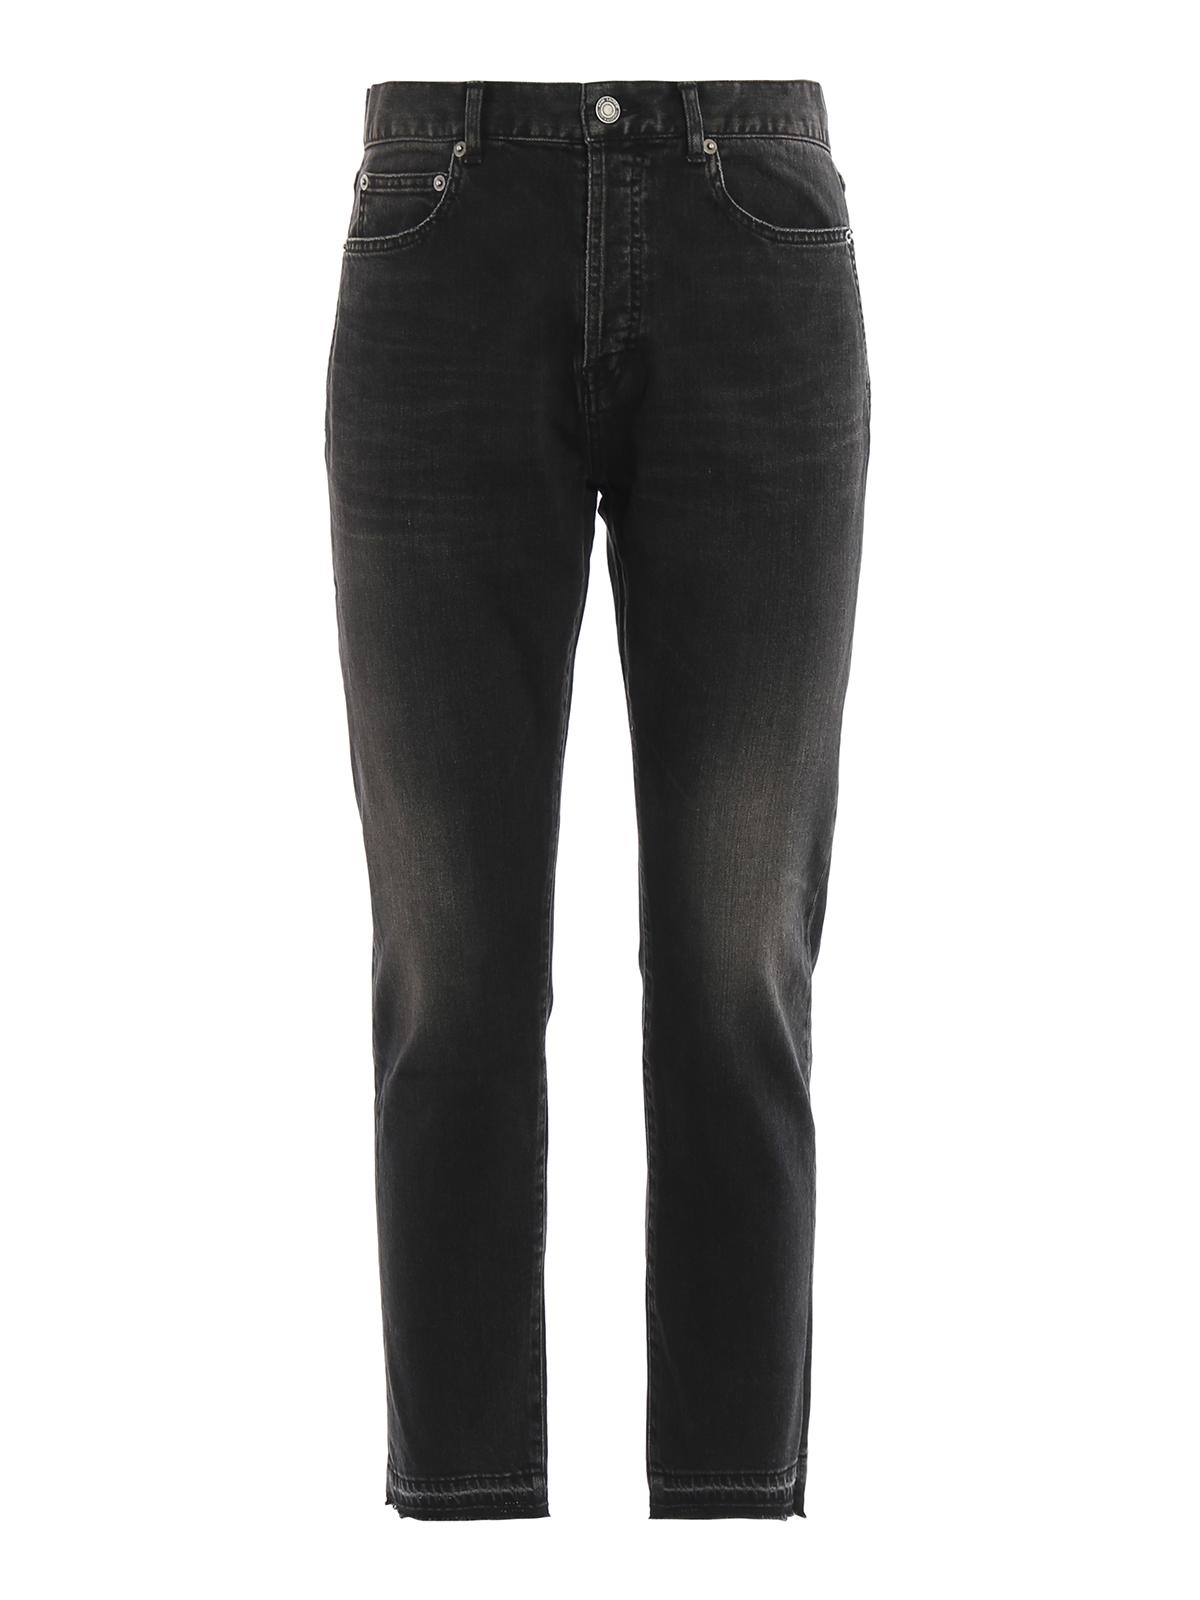 Saint Laurent Denim Faded Jeans With Raw Cut Hem in Black for Men - Lyst